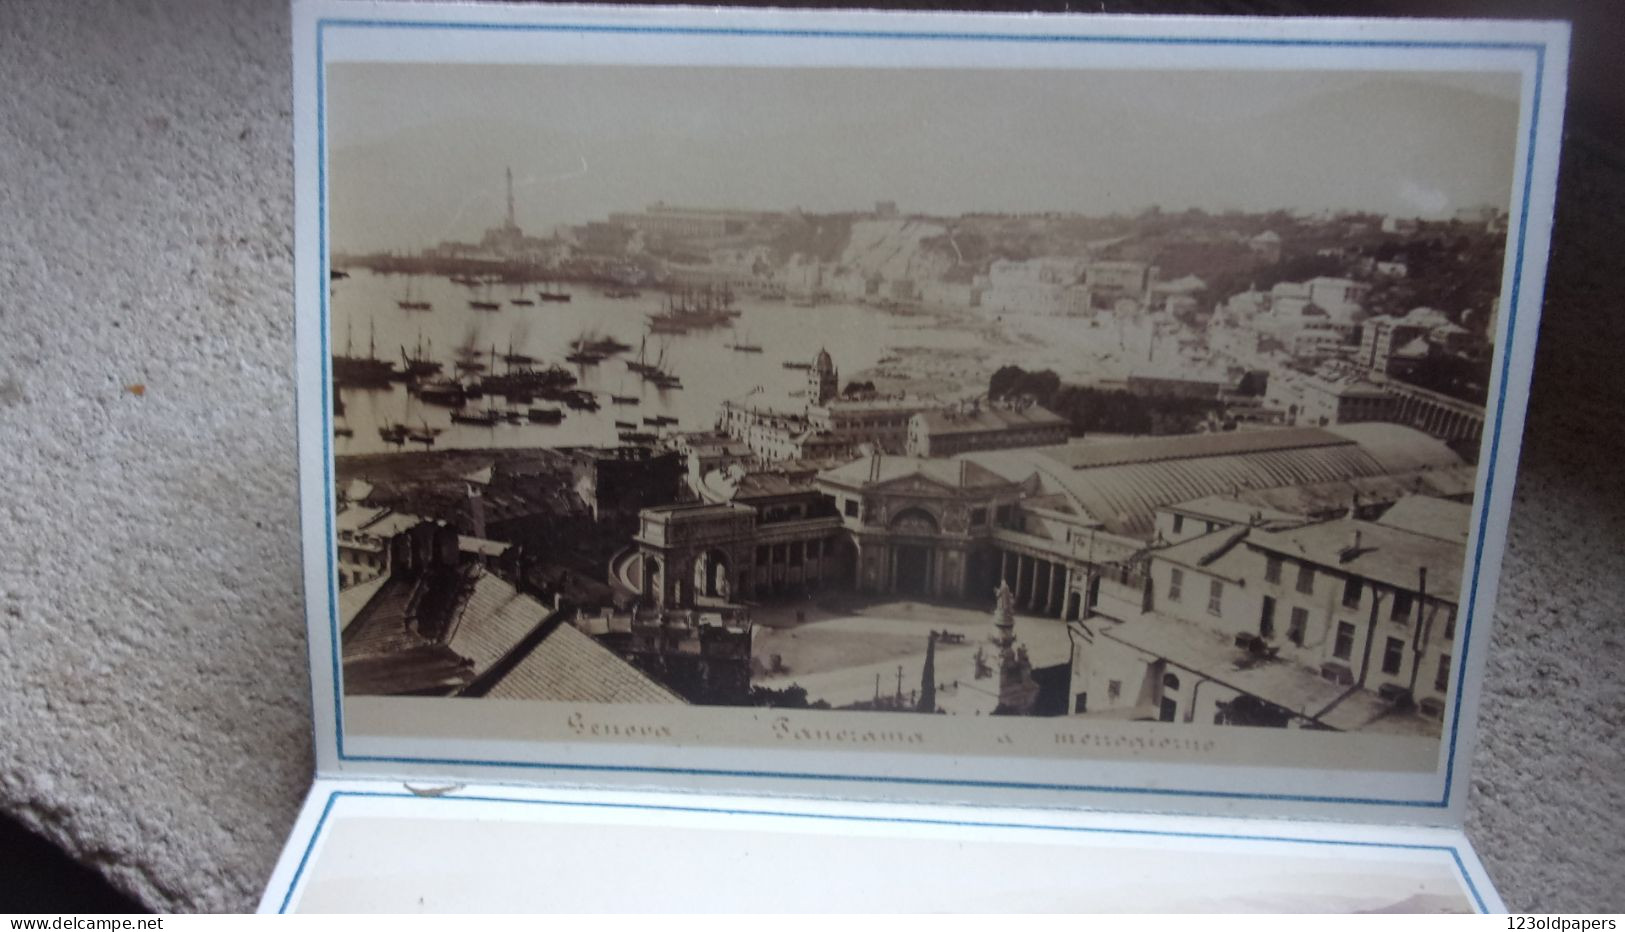 LIGURIA ITALIA RICARDO DI Genova  24  foto originale Decoix del 1880 circa GENOA GENES ITALIE